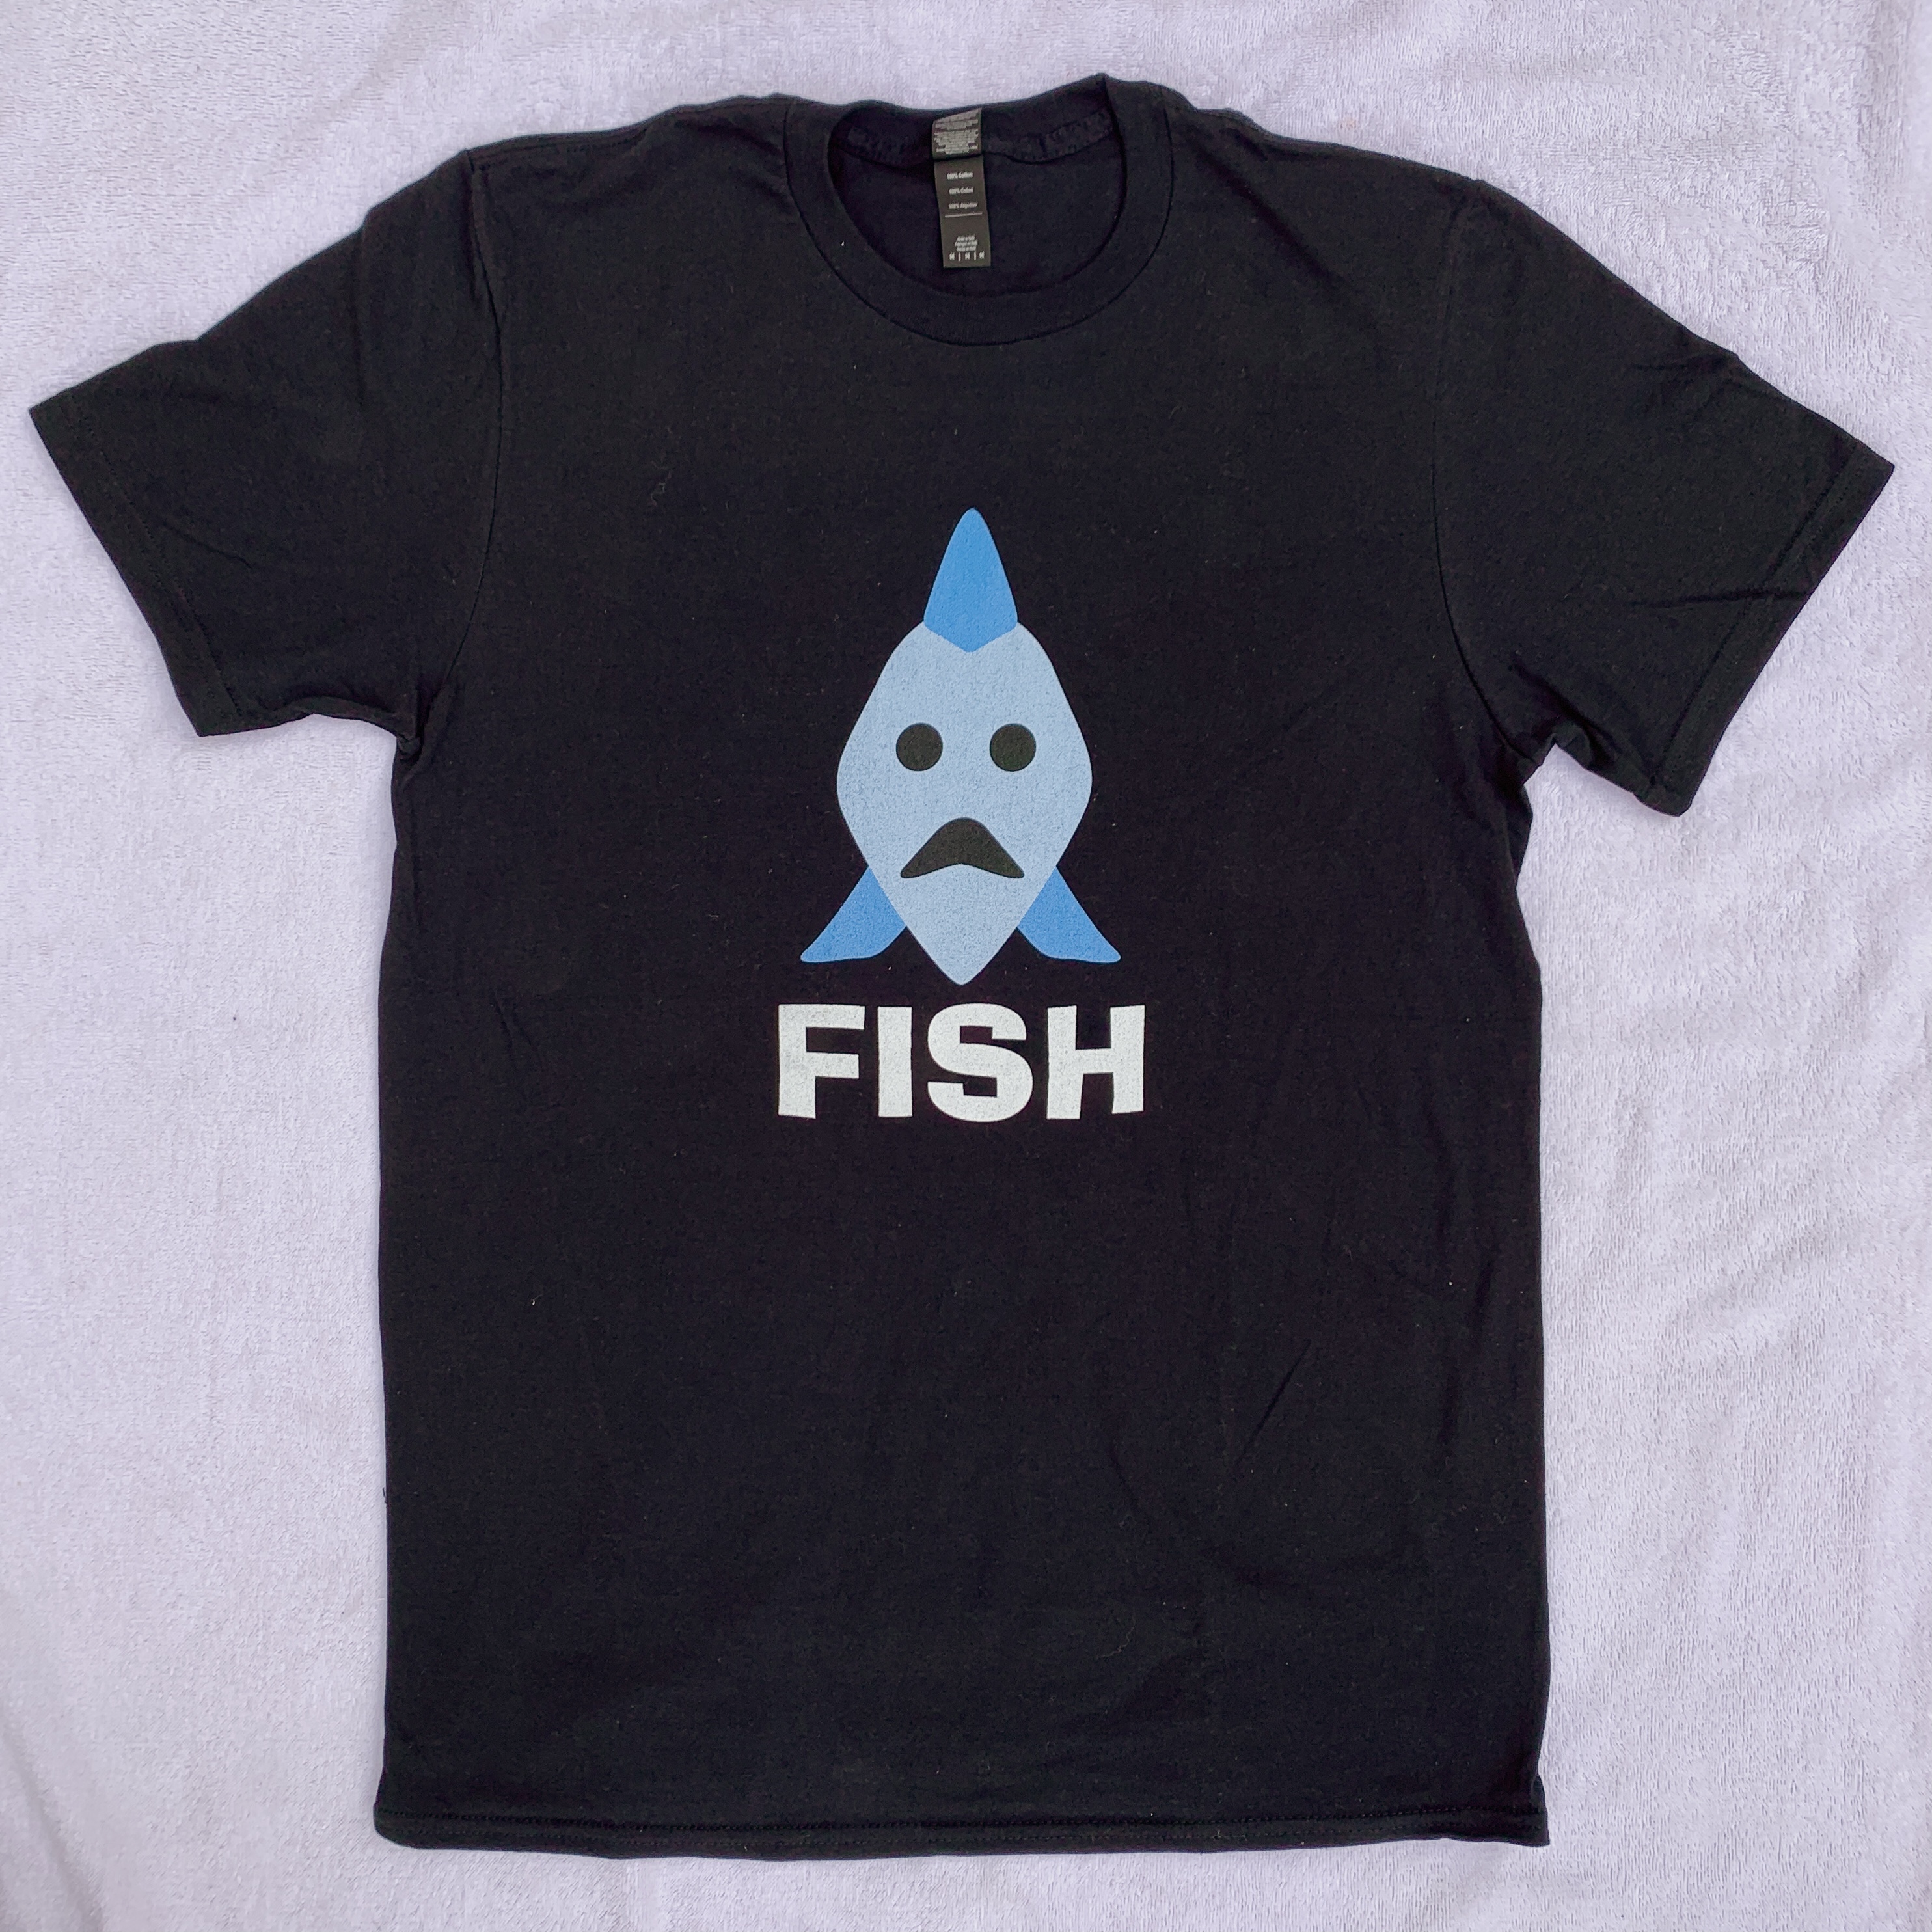 🐟 FISH Shirt!